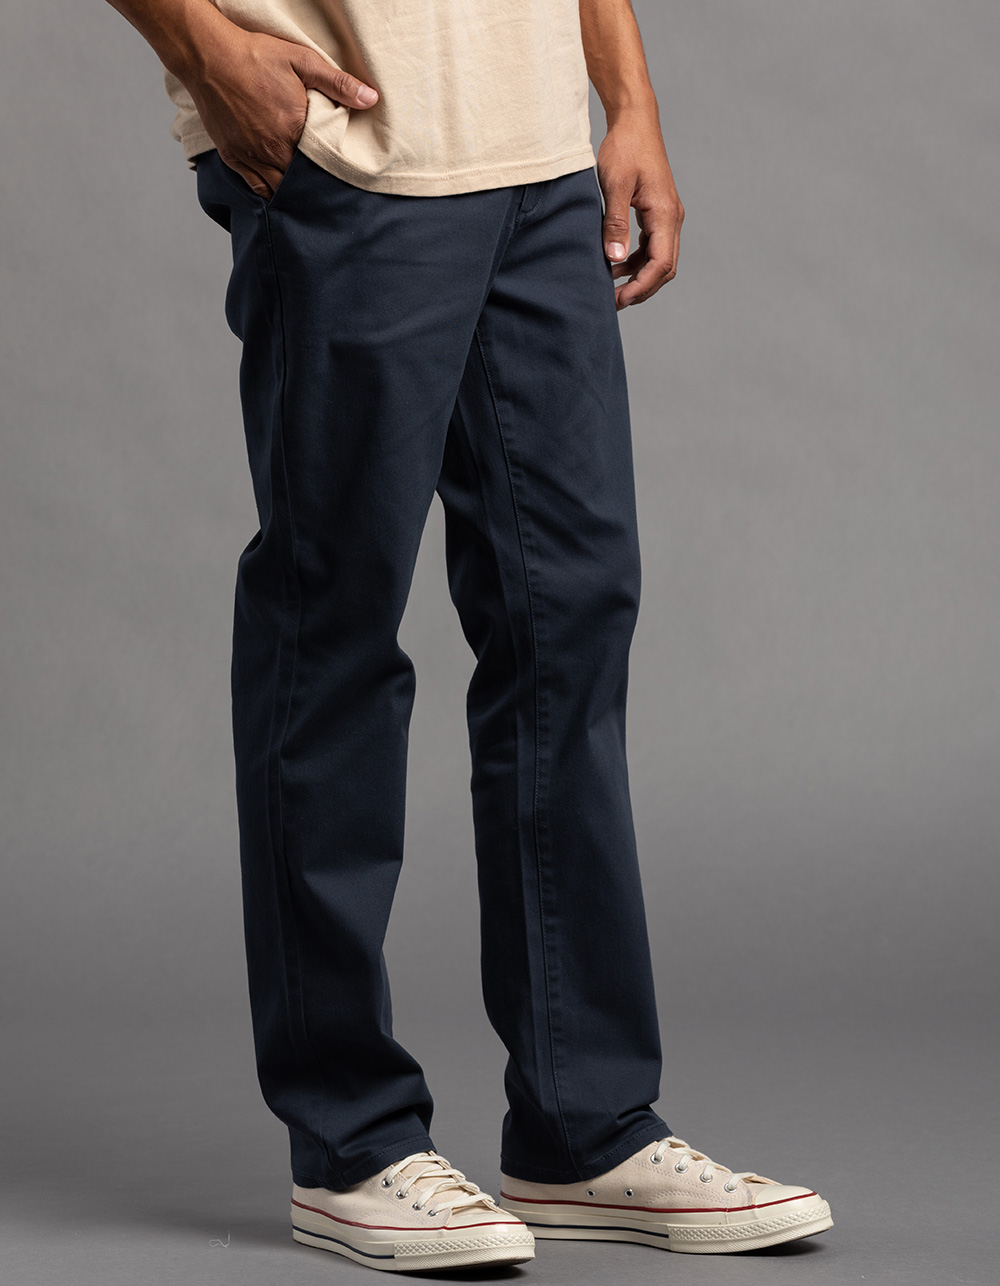 Gilmore Cargo Pants Navy  Cargo pants, Blue pants outfit, Blue cargo pants